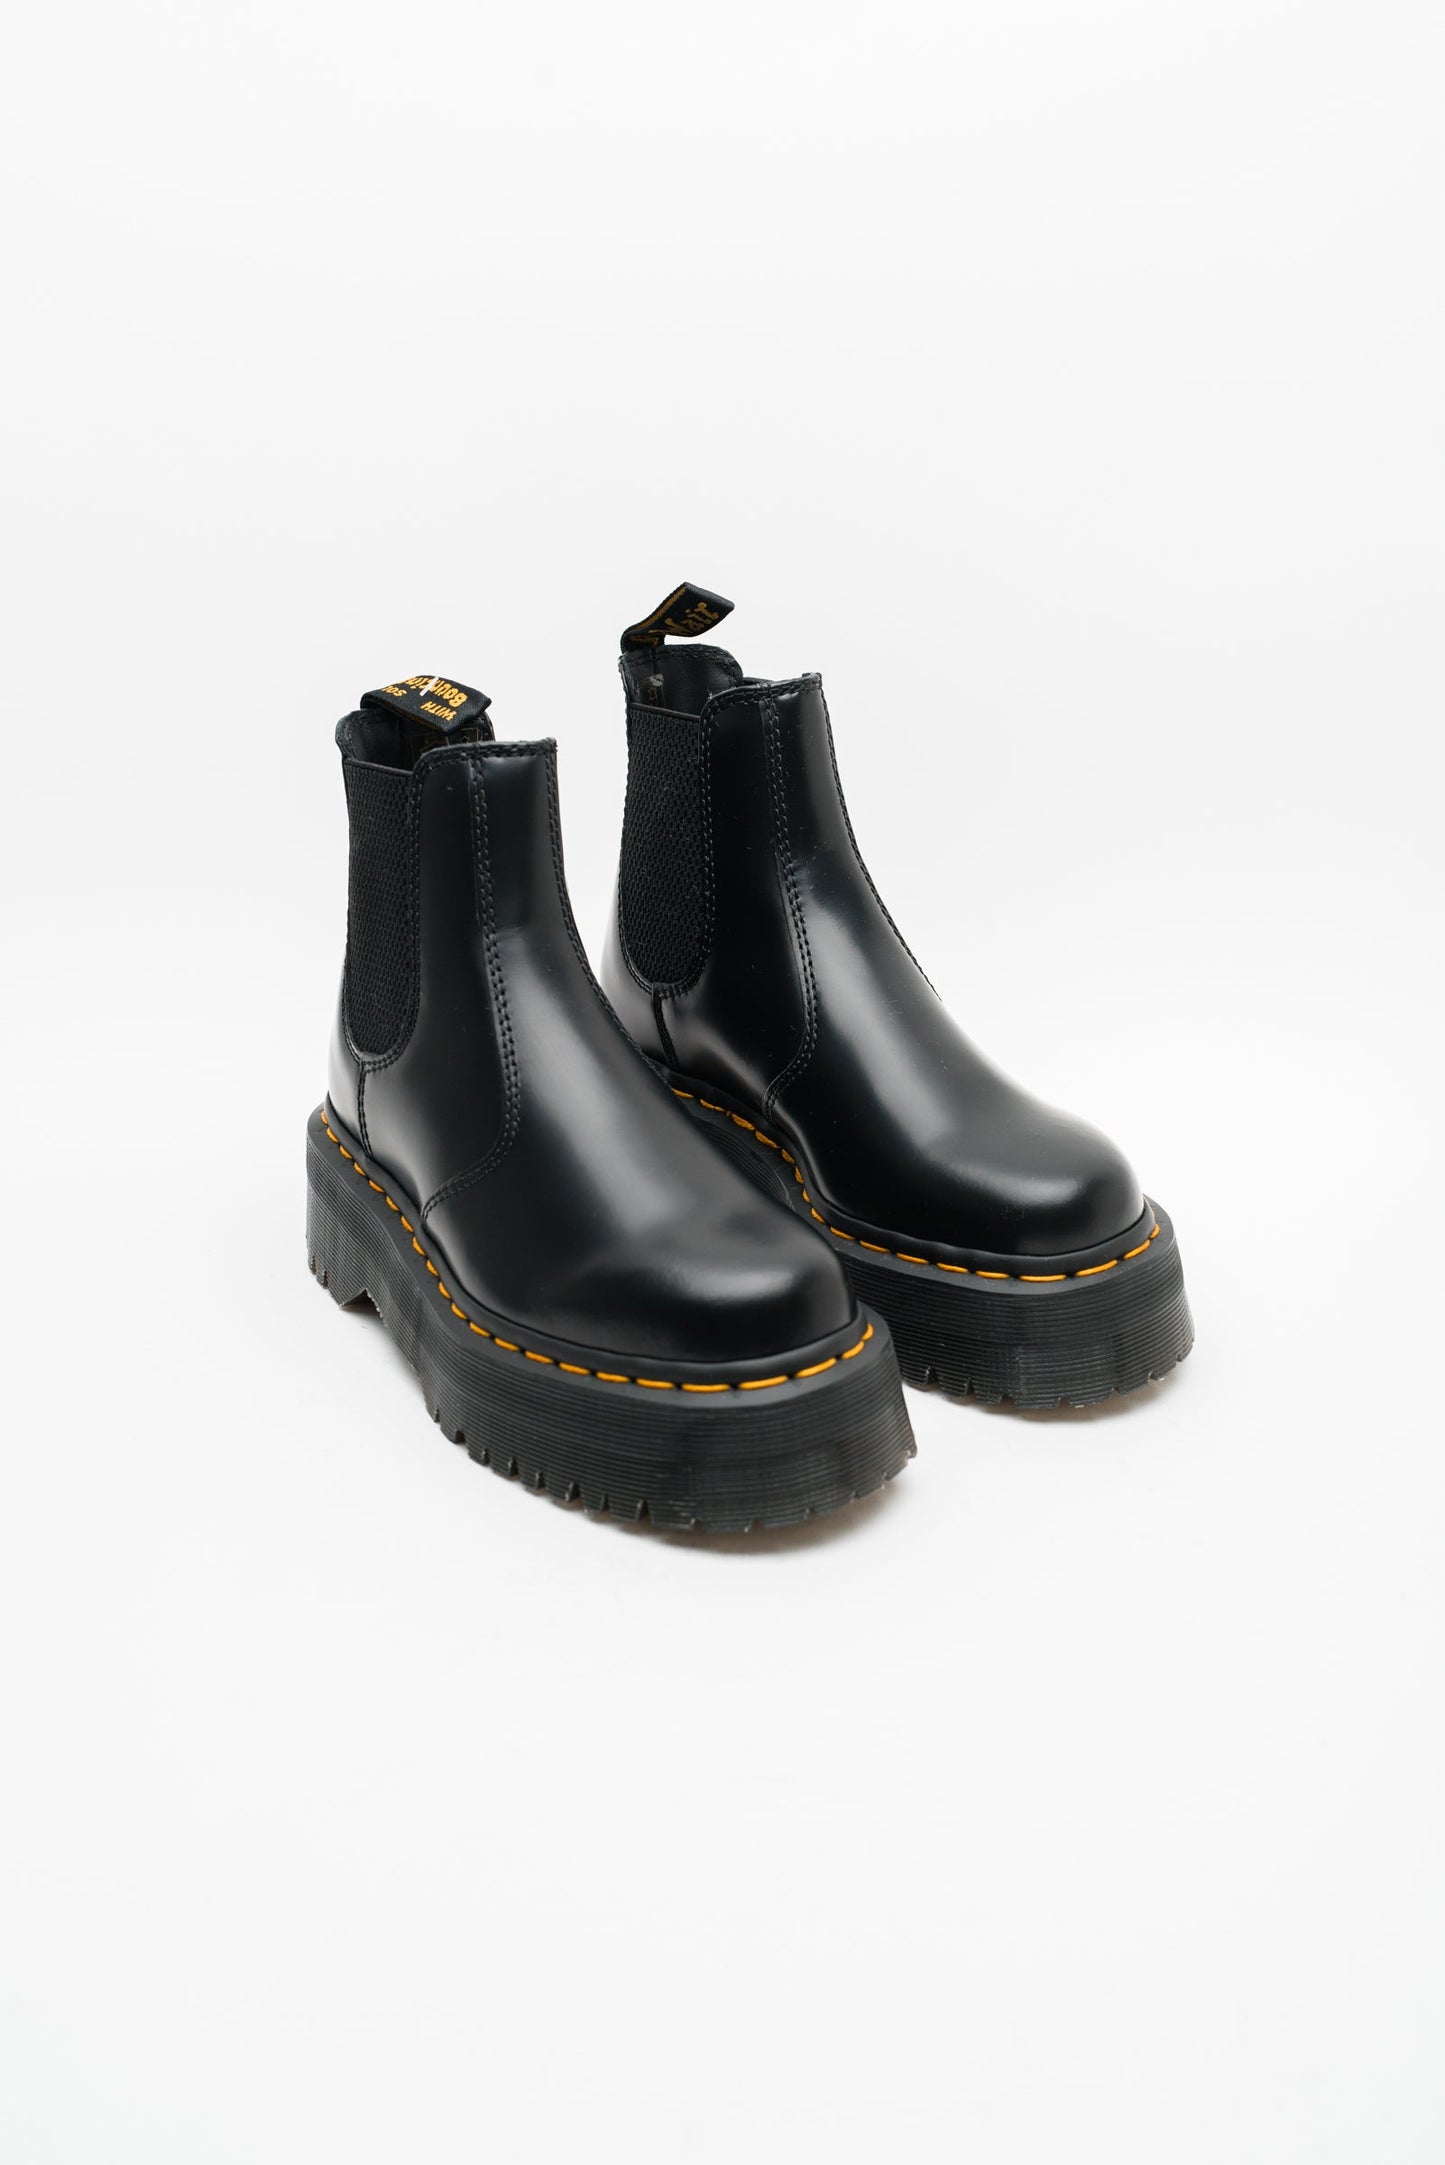 Load image into Gallery viewer, Dr. Martens 2976 Quad Platform Chelsea Boots - Black
